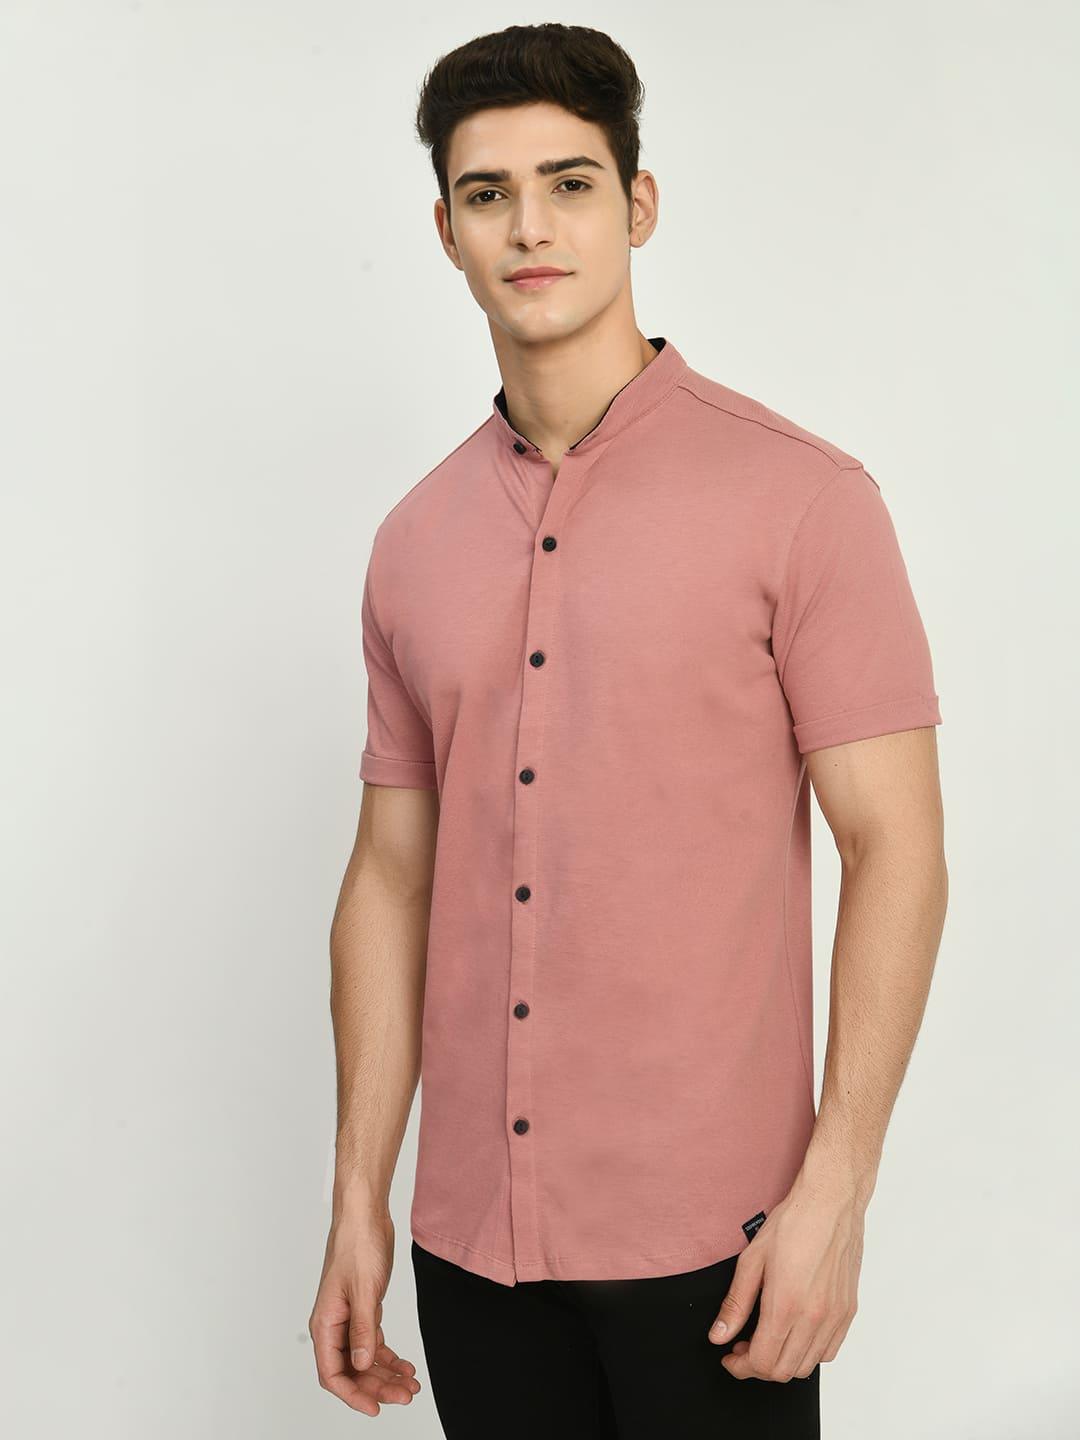 Men's Solid Dark Pink Mandarin Collar Shirt